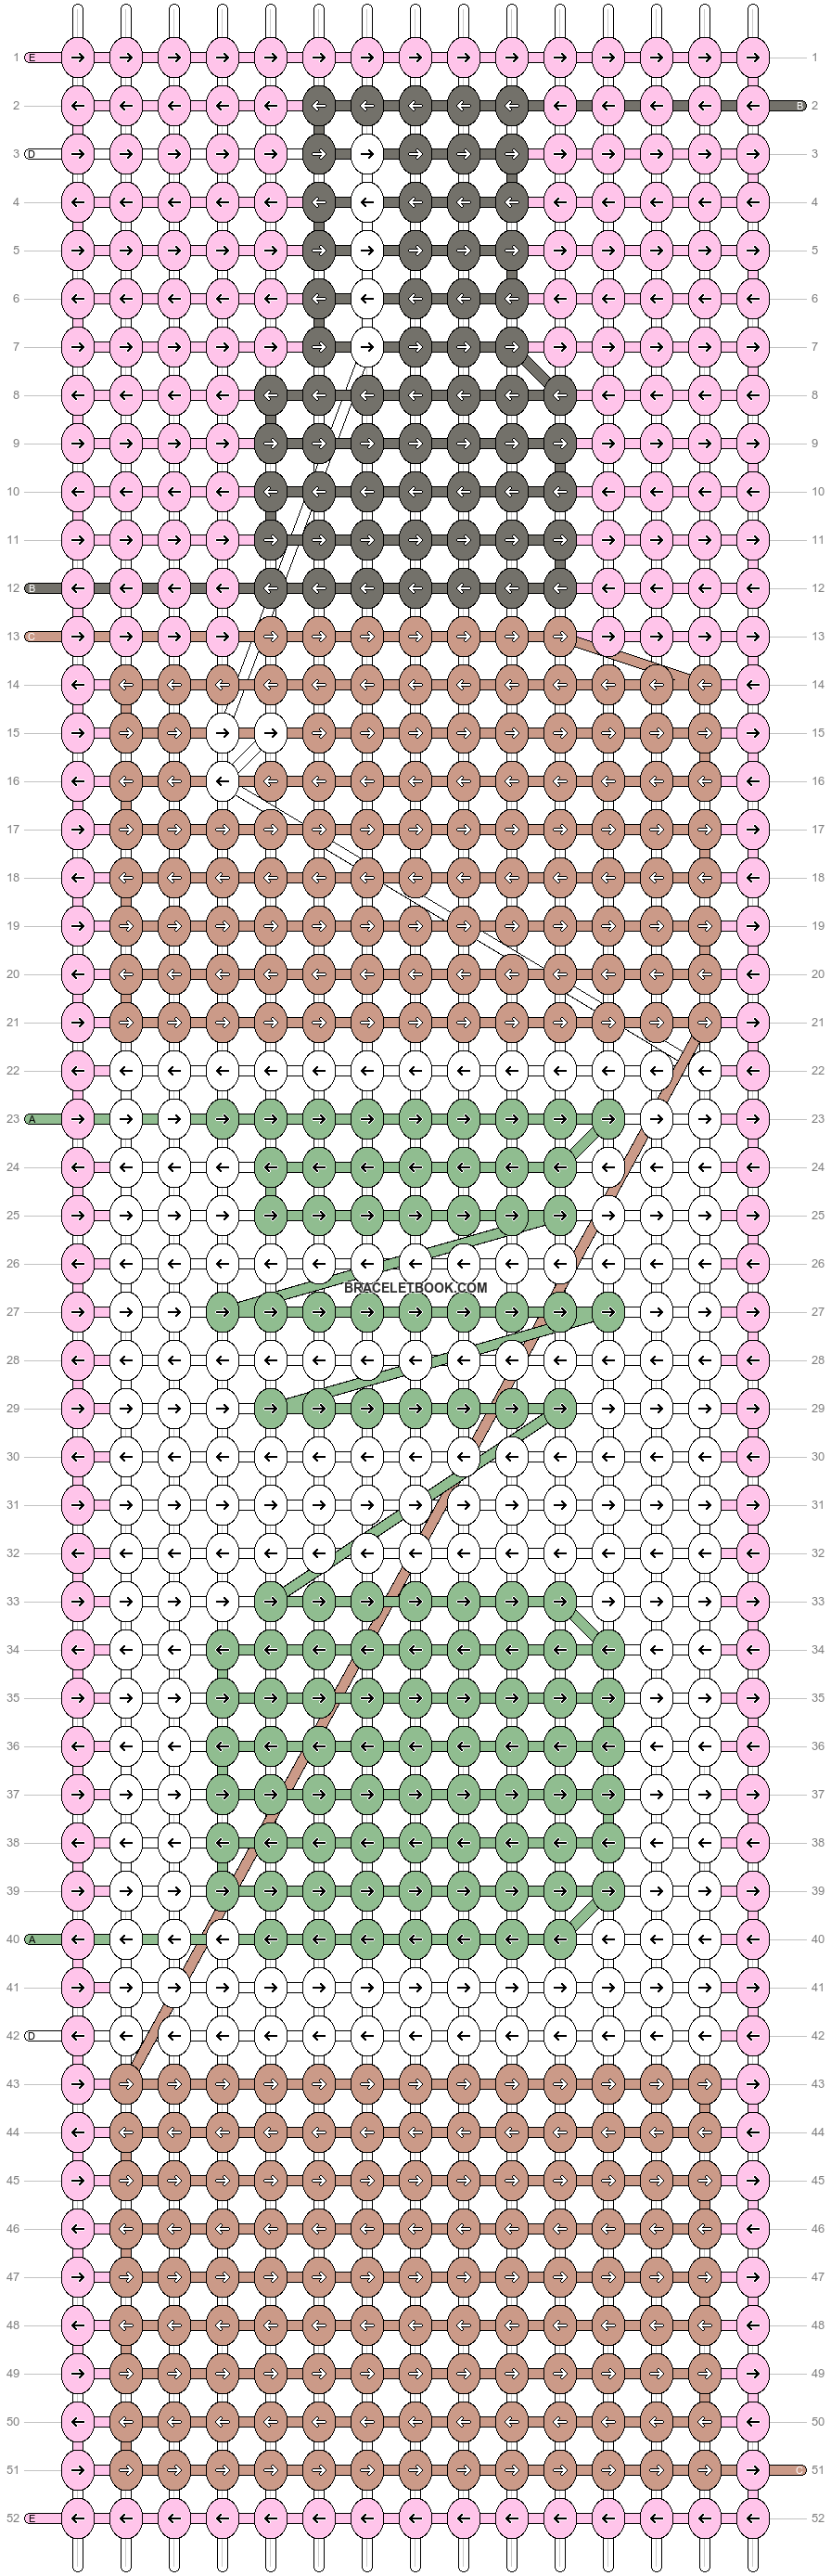 Alpha pattern #49028 variation #76910 pattern